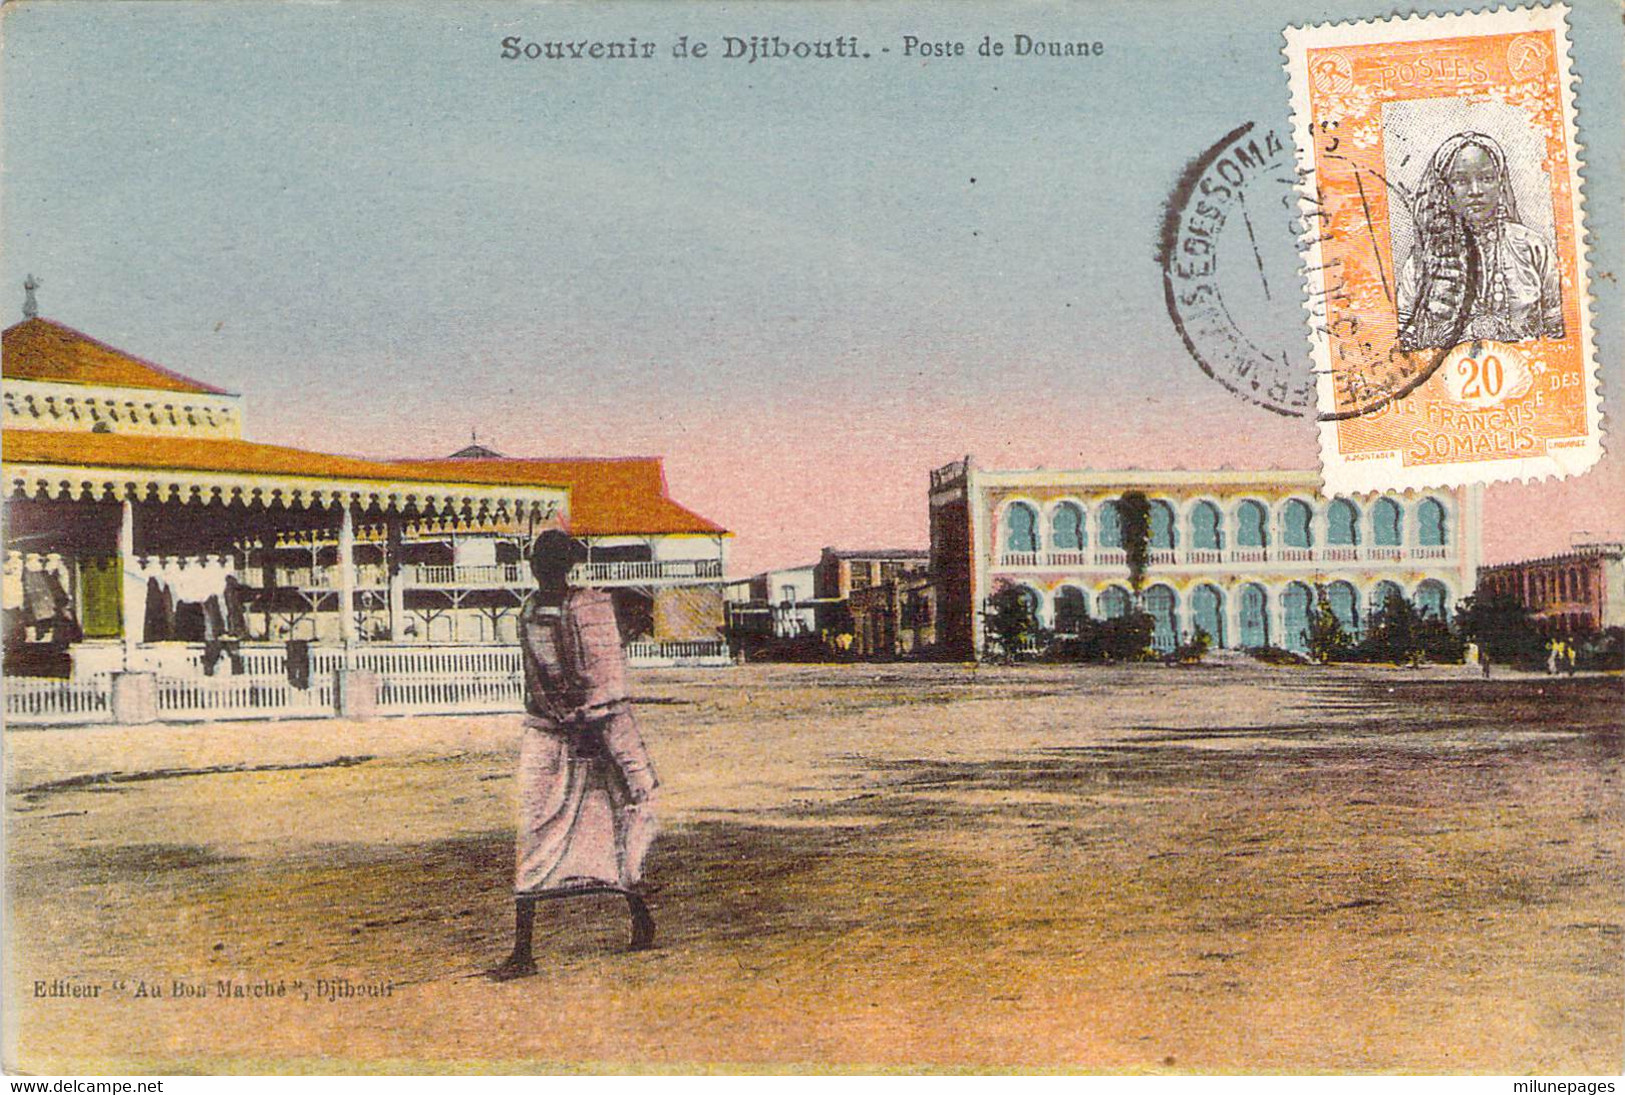 COTE Française Des Somalis Poste De Douane De DJIBOUTI - Somalia